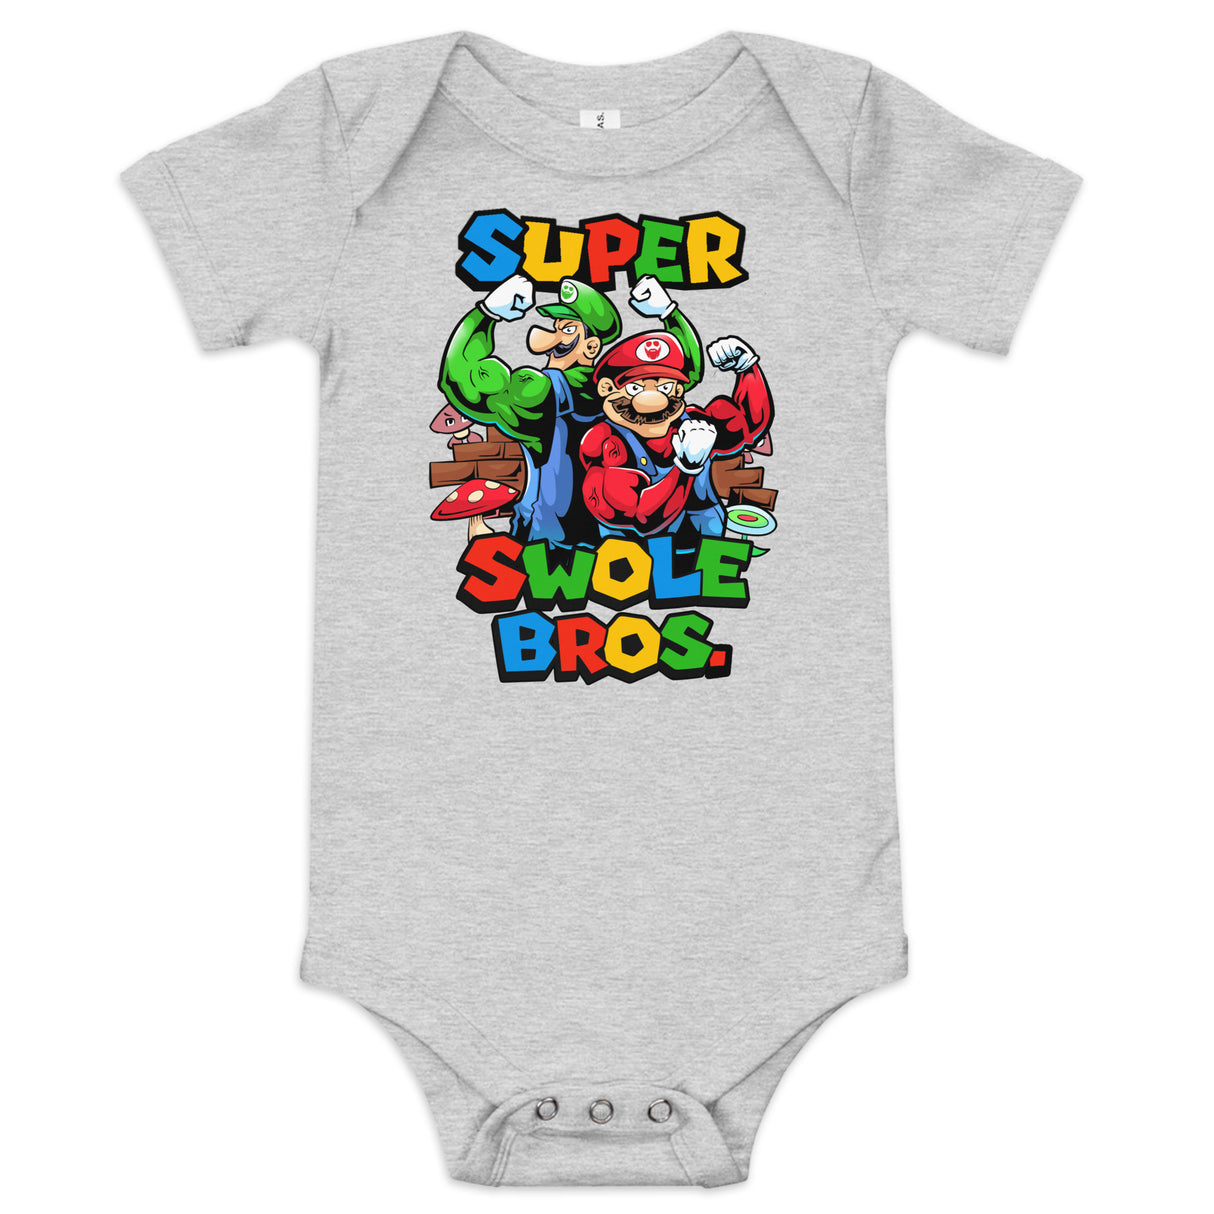 Super Swole Bros Baby Onesie